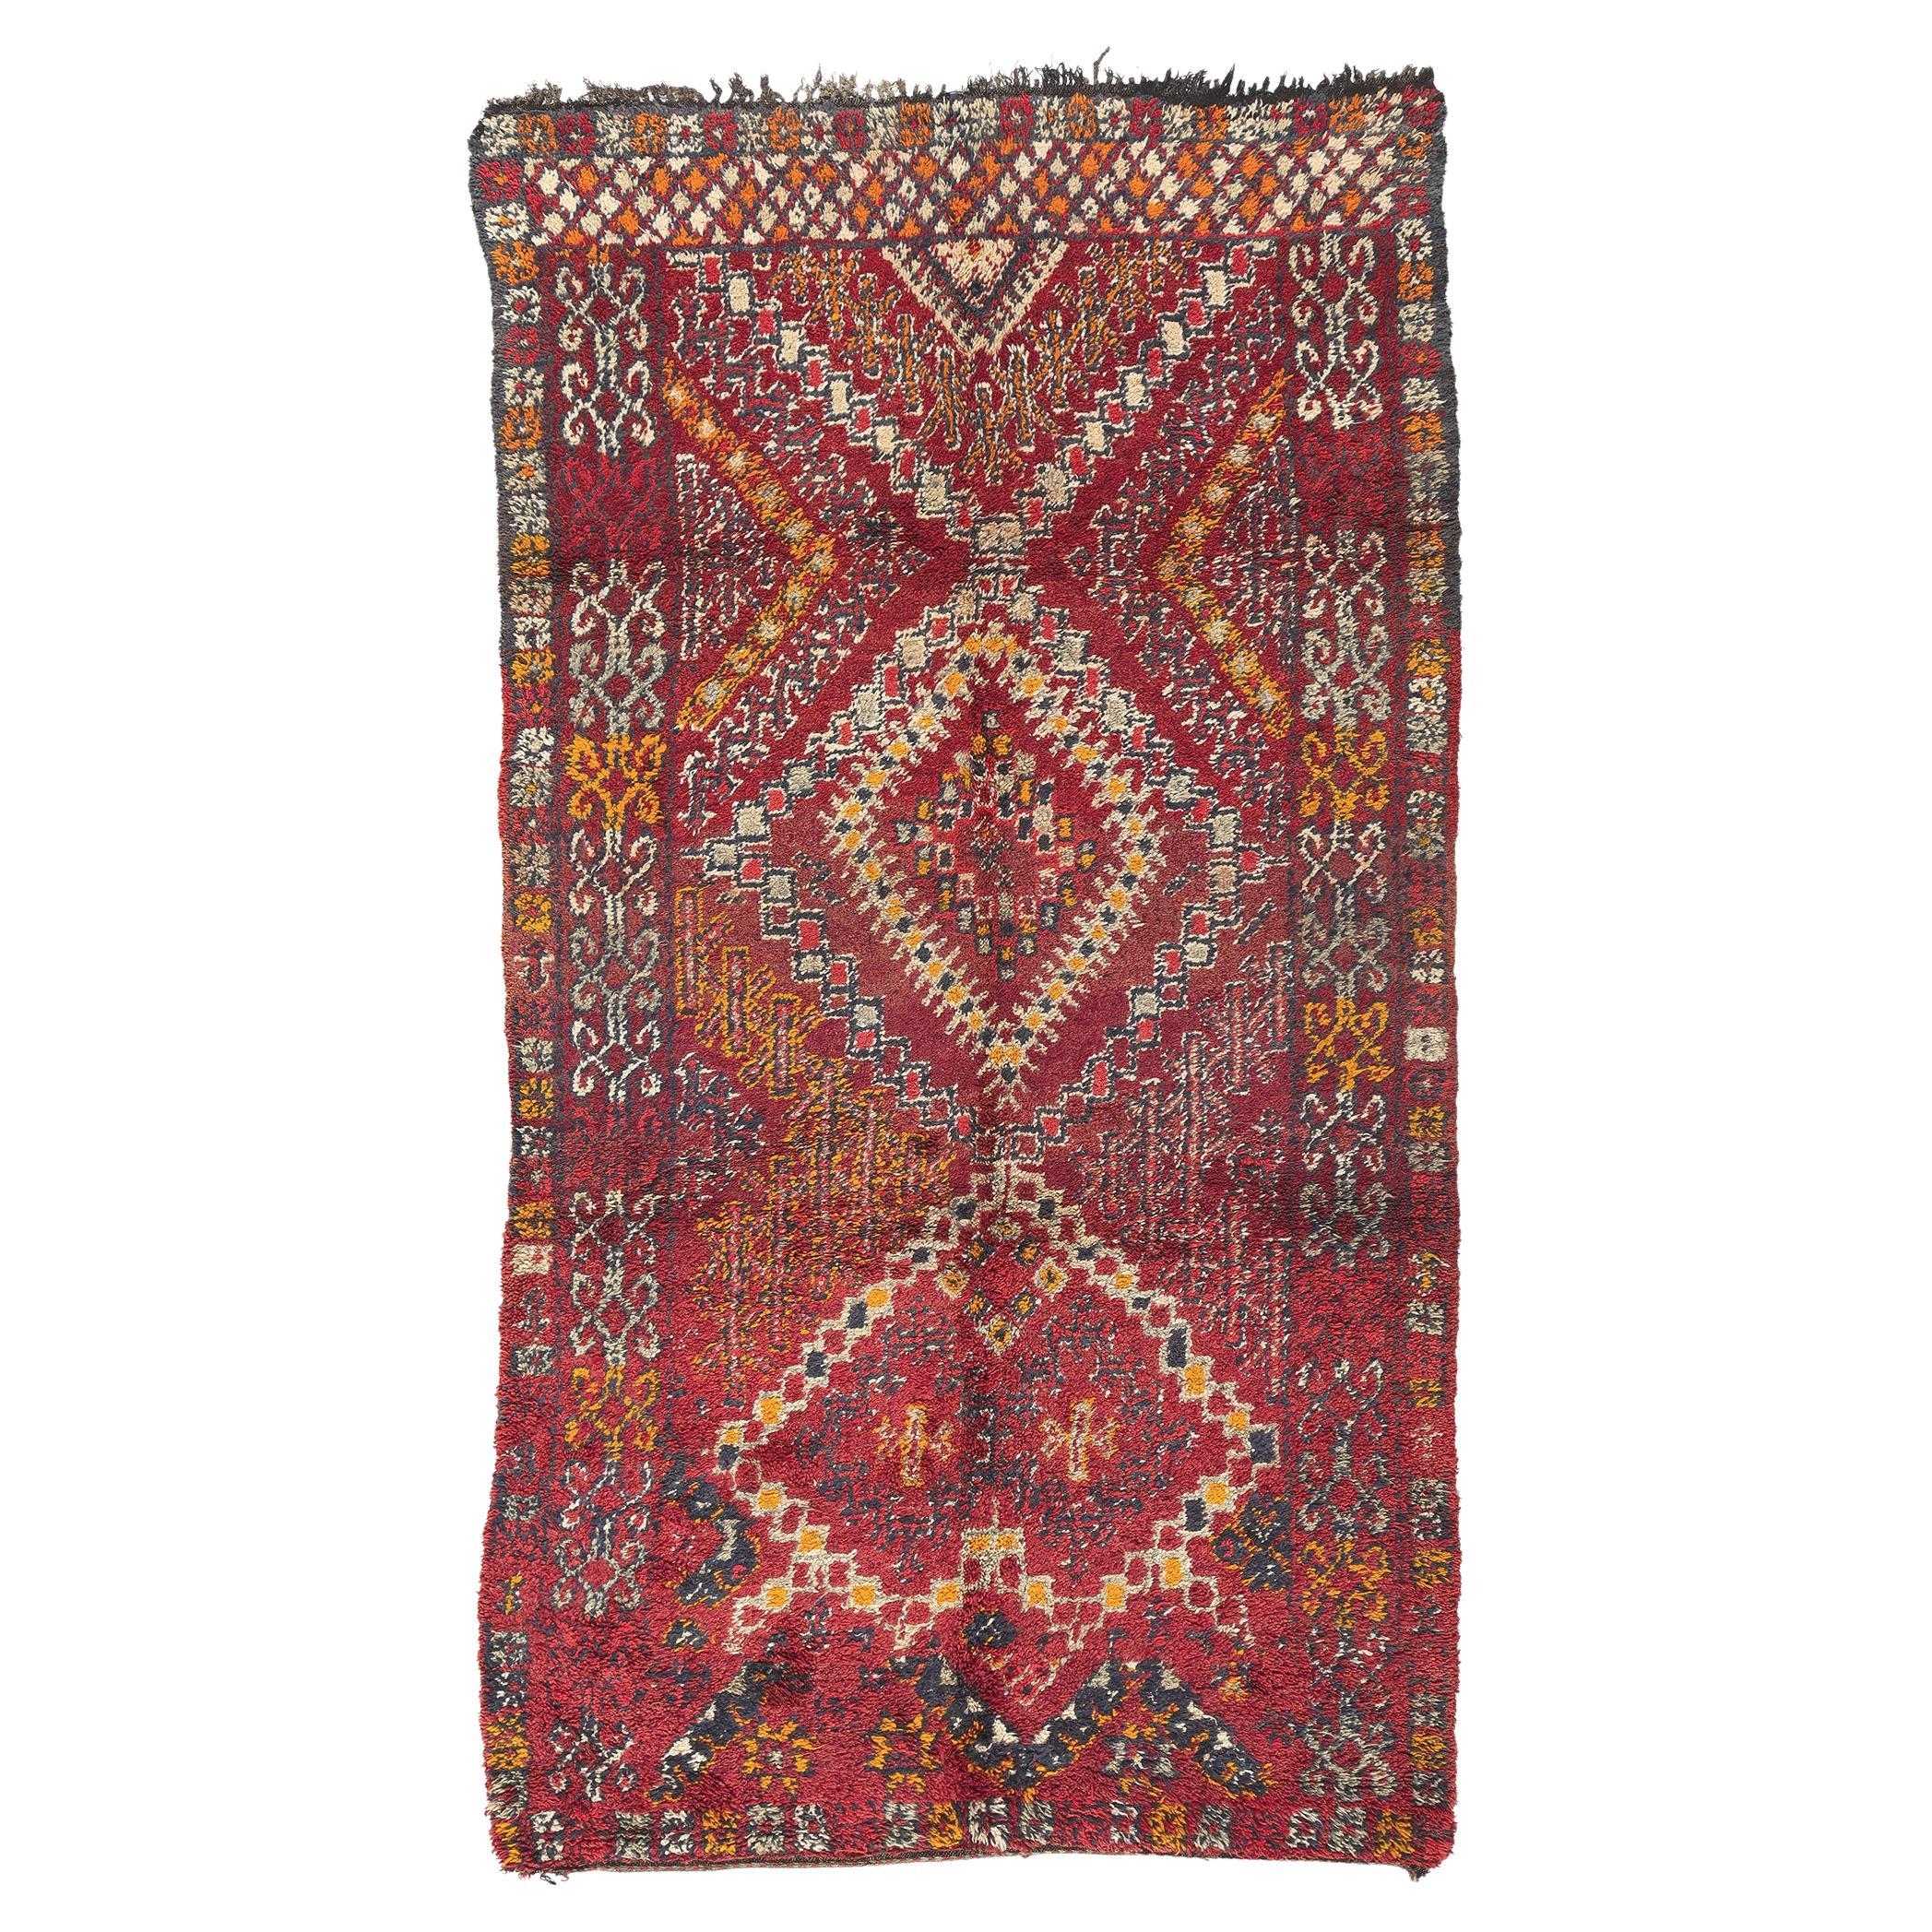 Vintage Beni MGuild Moroccan Rug, Tribal Enchantment Meets Midcentury Modern For Sale